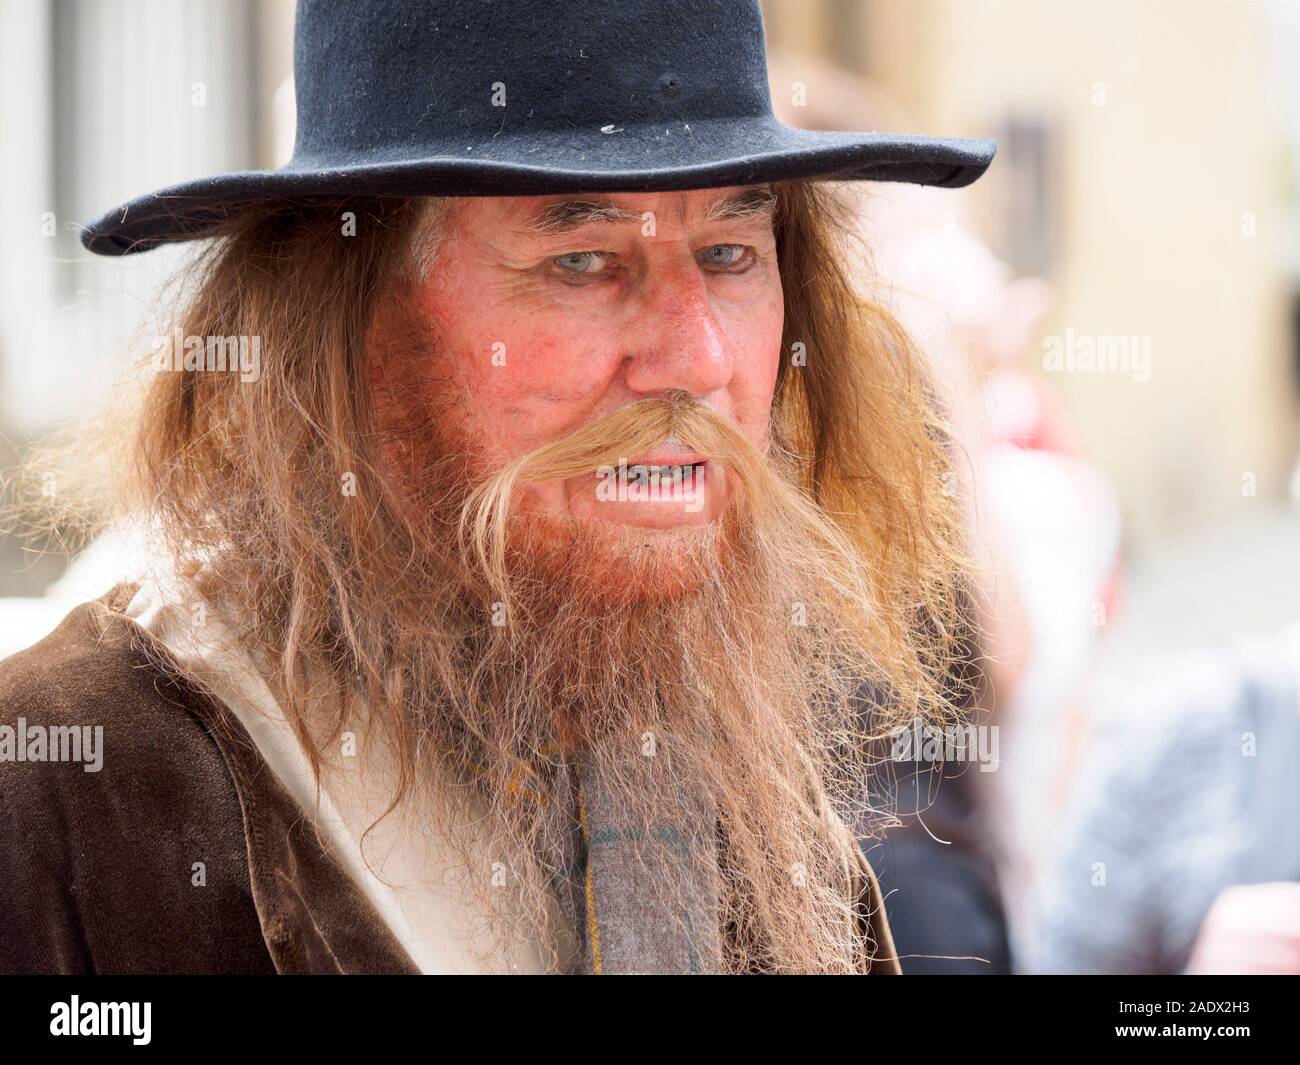 Actor John Endicott as Fagin from Oliver Twist in the Rochester Dickens Festival 2019. Stock Photo